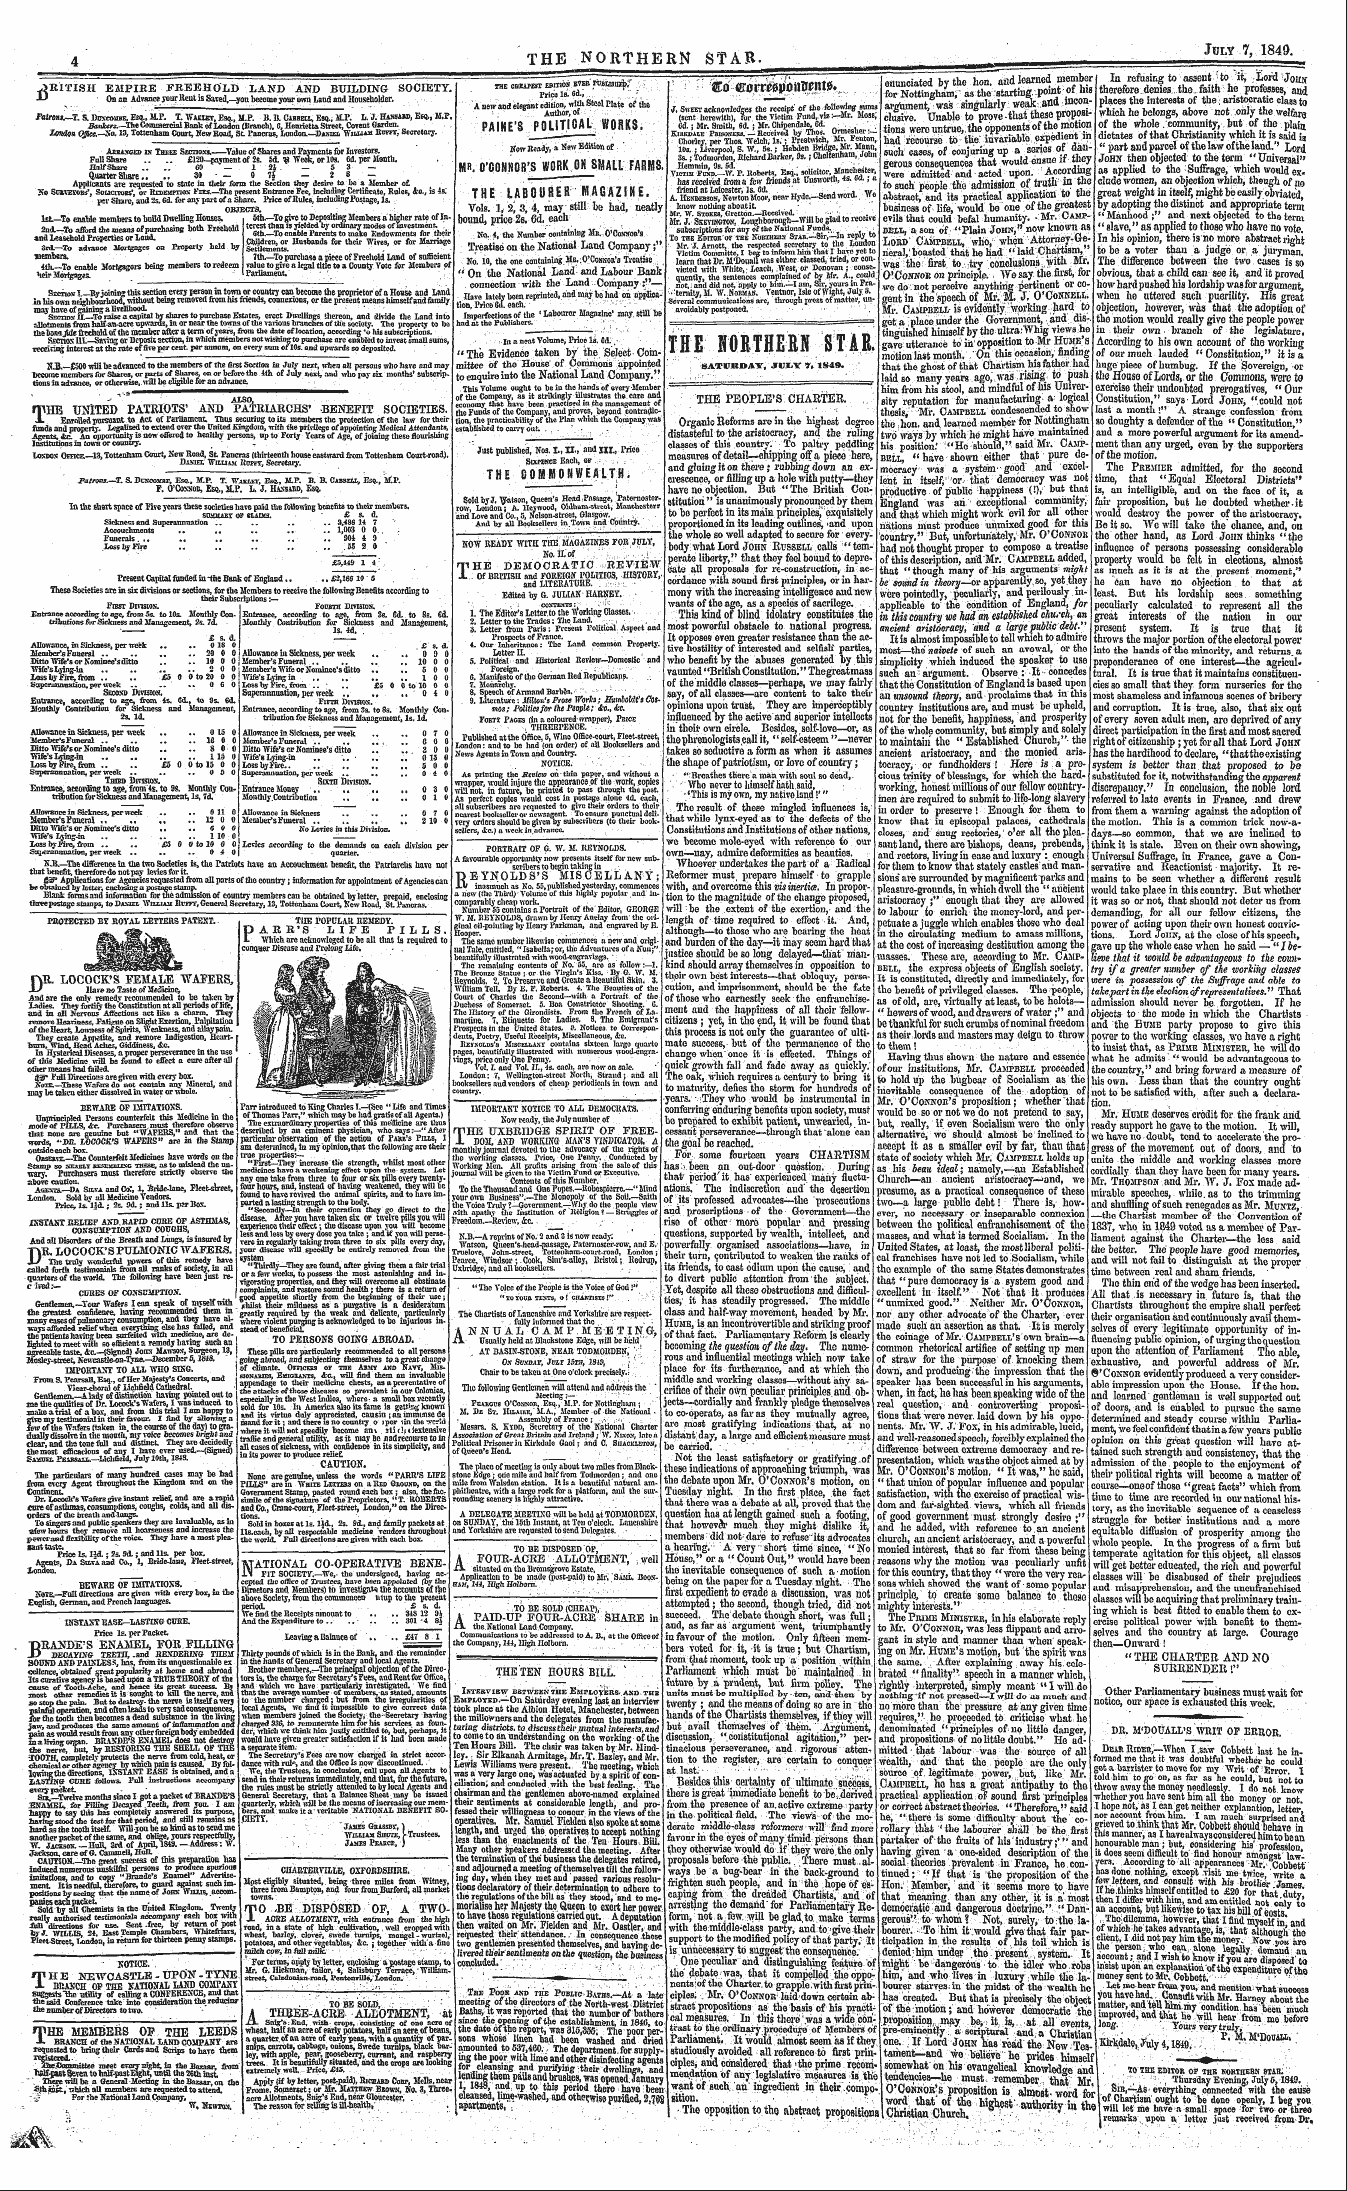 Northern Star (1837-1852): jS F Y, 3rd edition - Ad00428